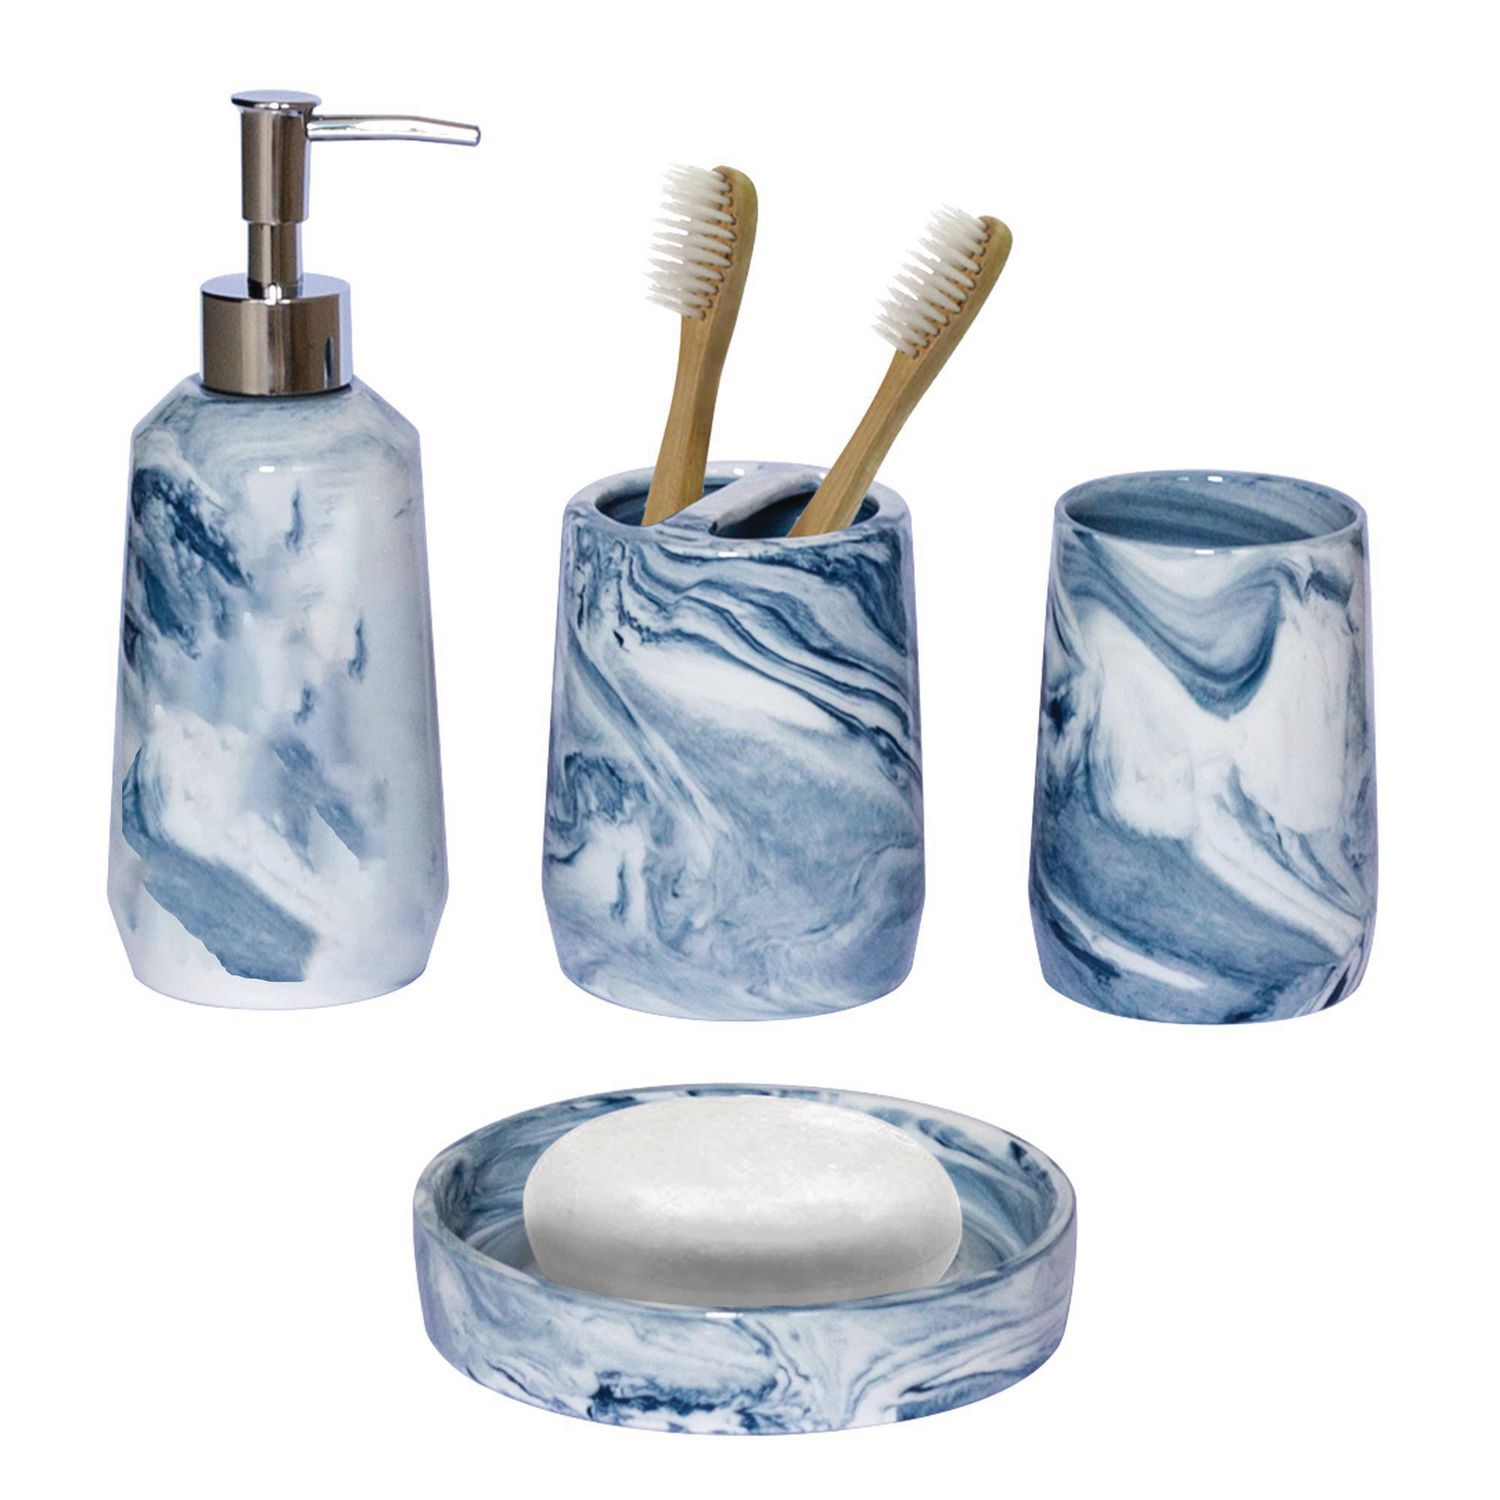 hometrends 4-piece Bath Accessories Set - Blue Swirl | Walmart Canada